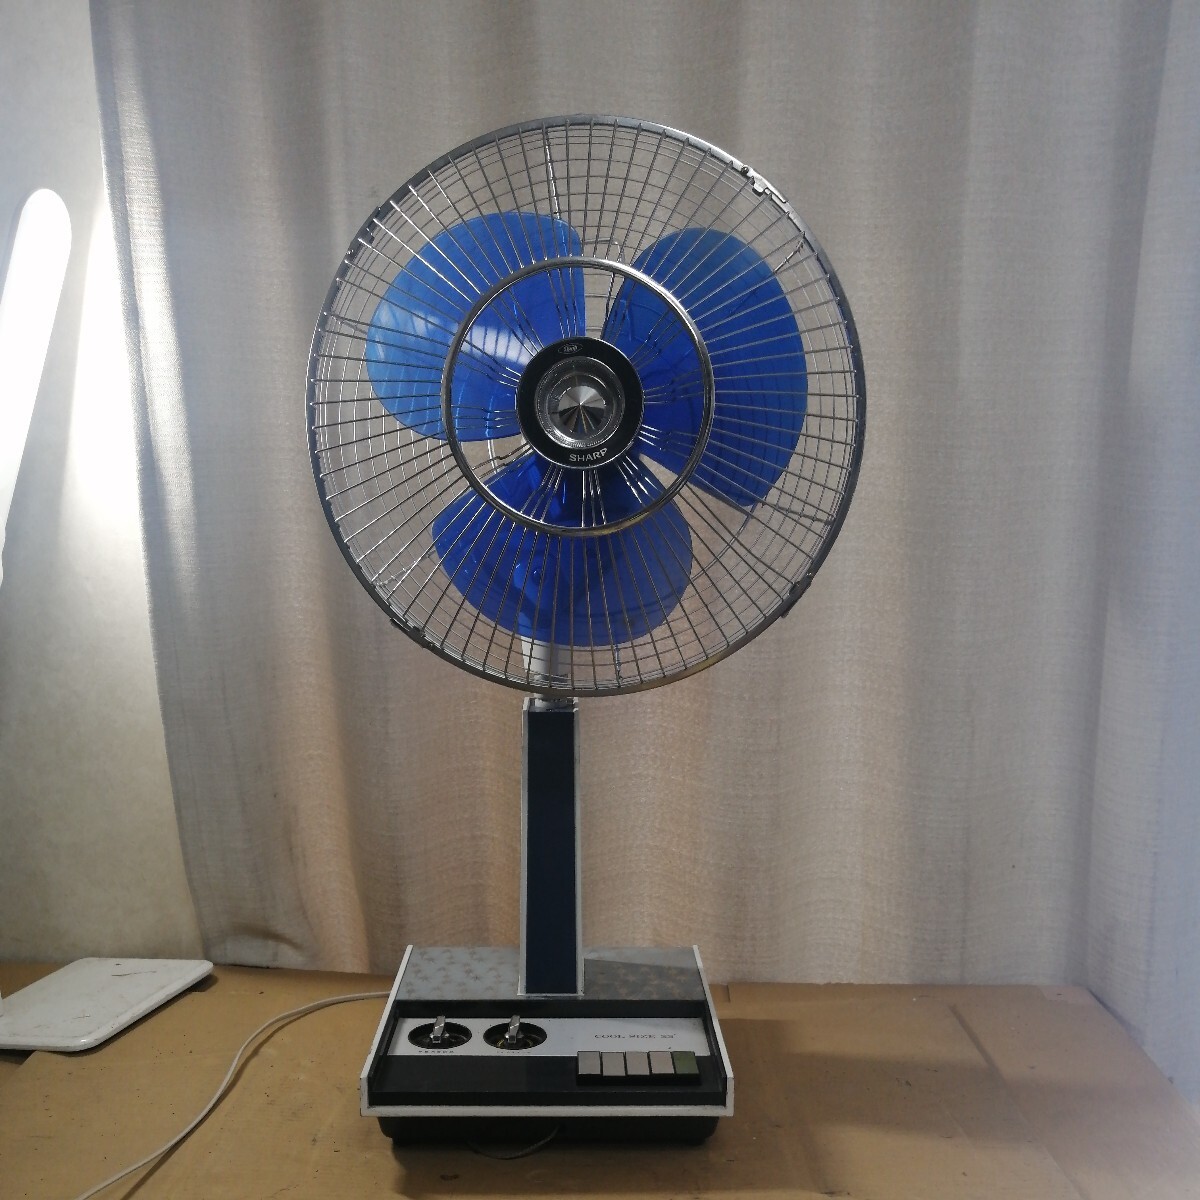  electrification verification settled SHARP sharp ps-33st cool size33 electric fan Showa Retro antique junk 50809w